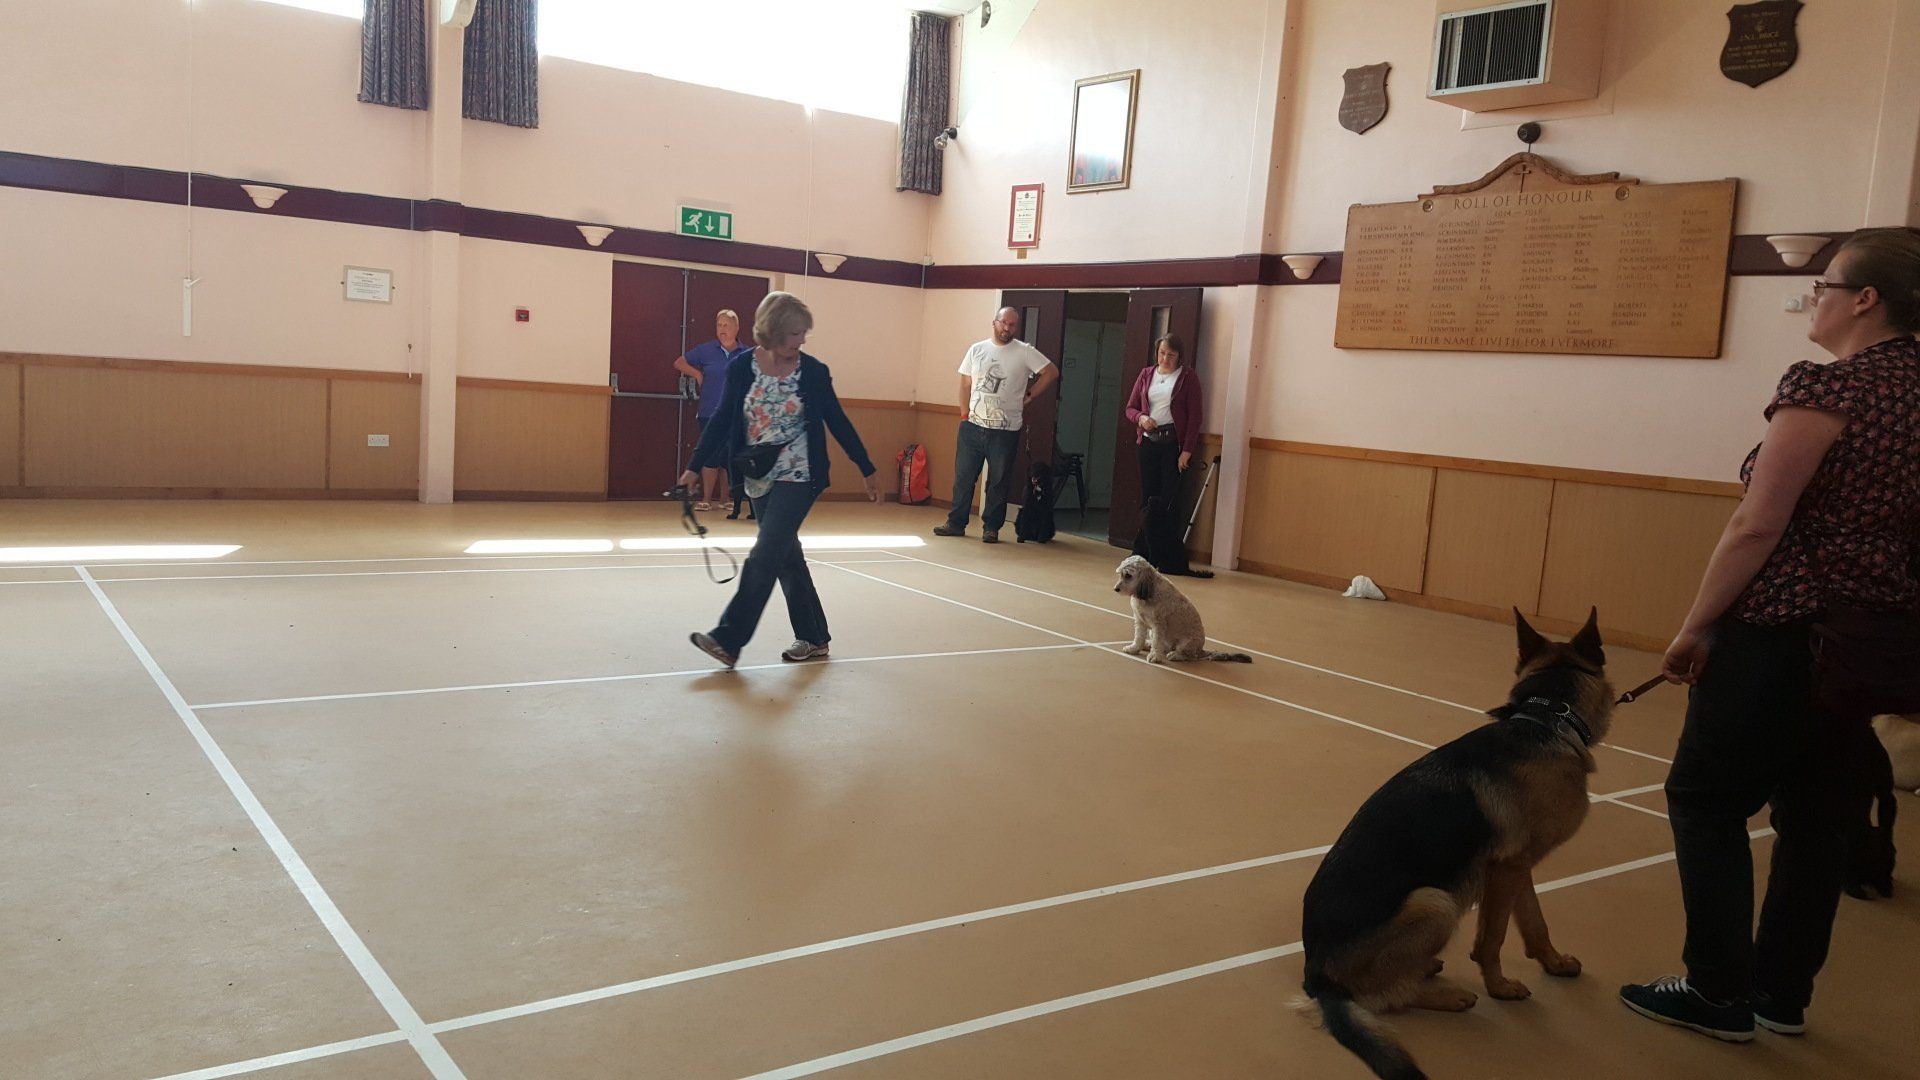 Dog training classes in progress